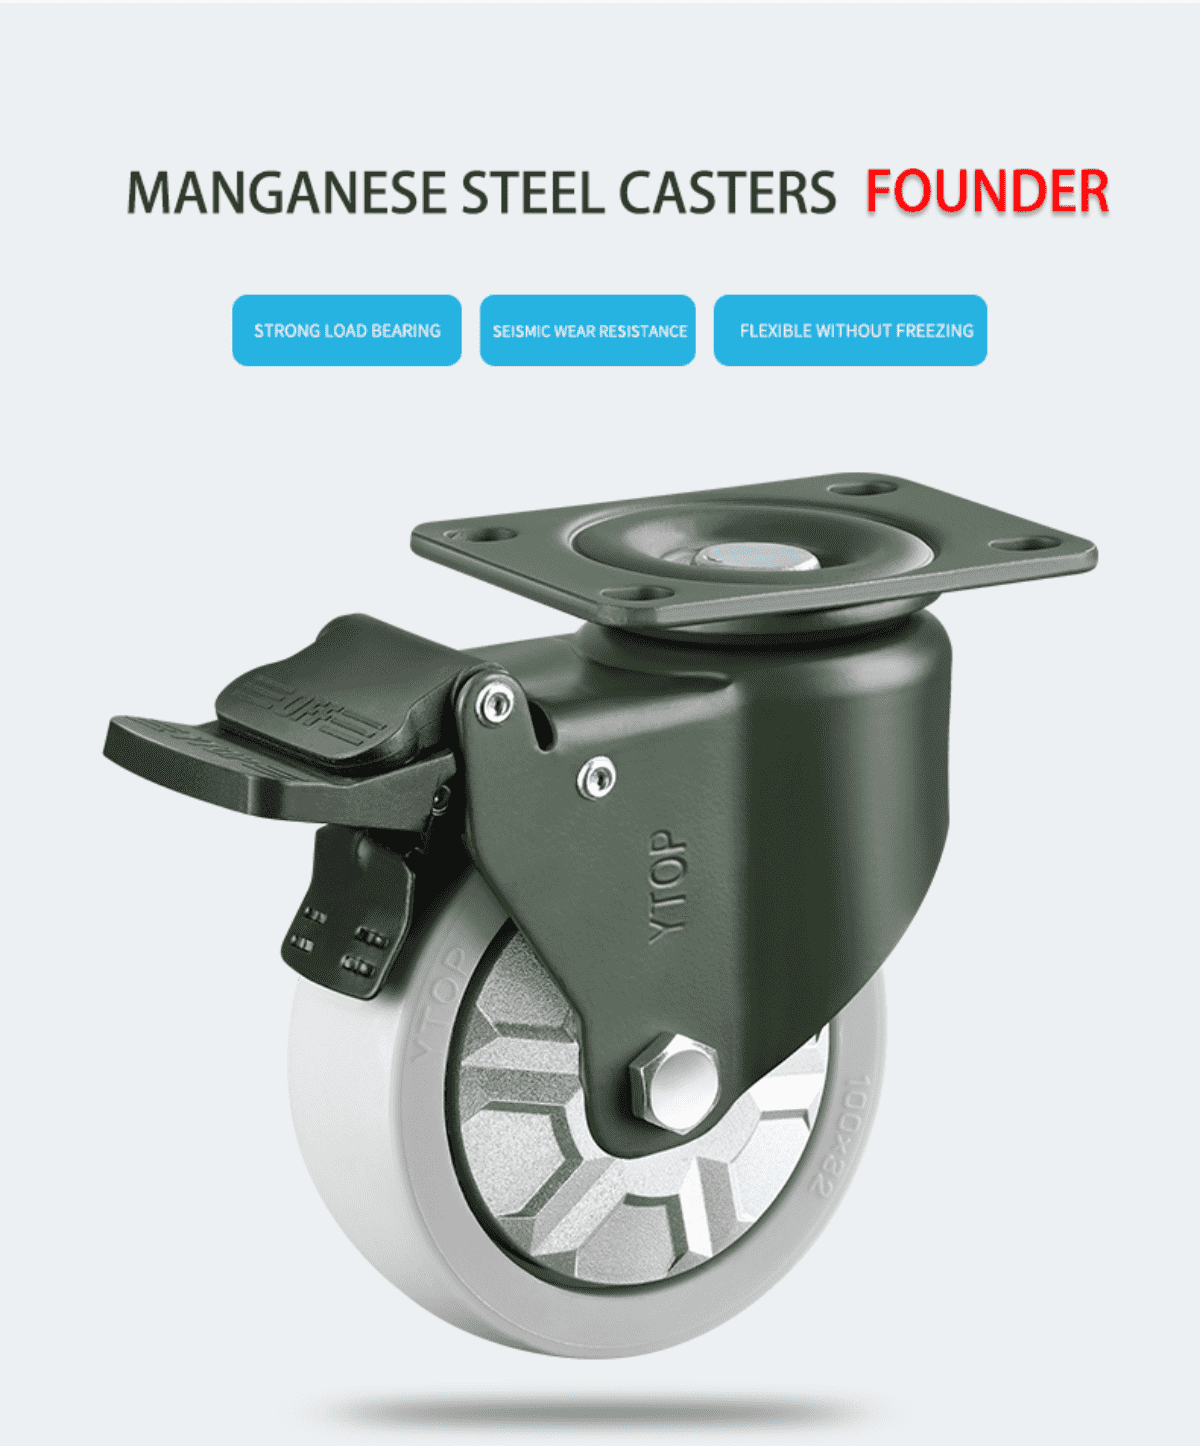 Caster Concepts expands TWERGO® ergonomic caster line - The Manufacturer